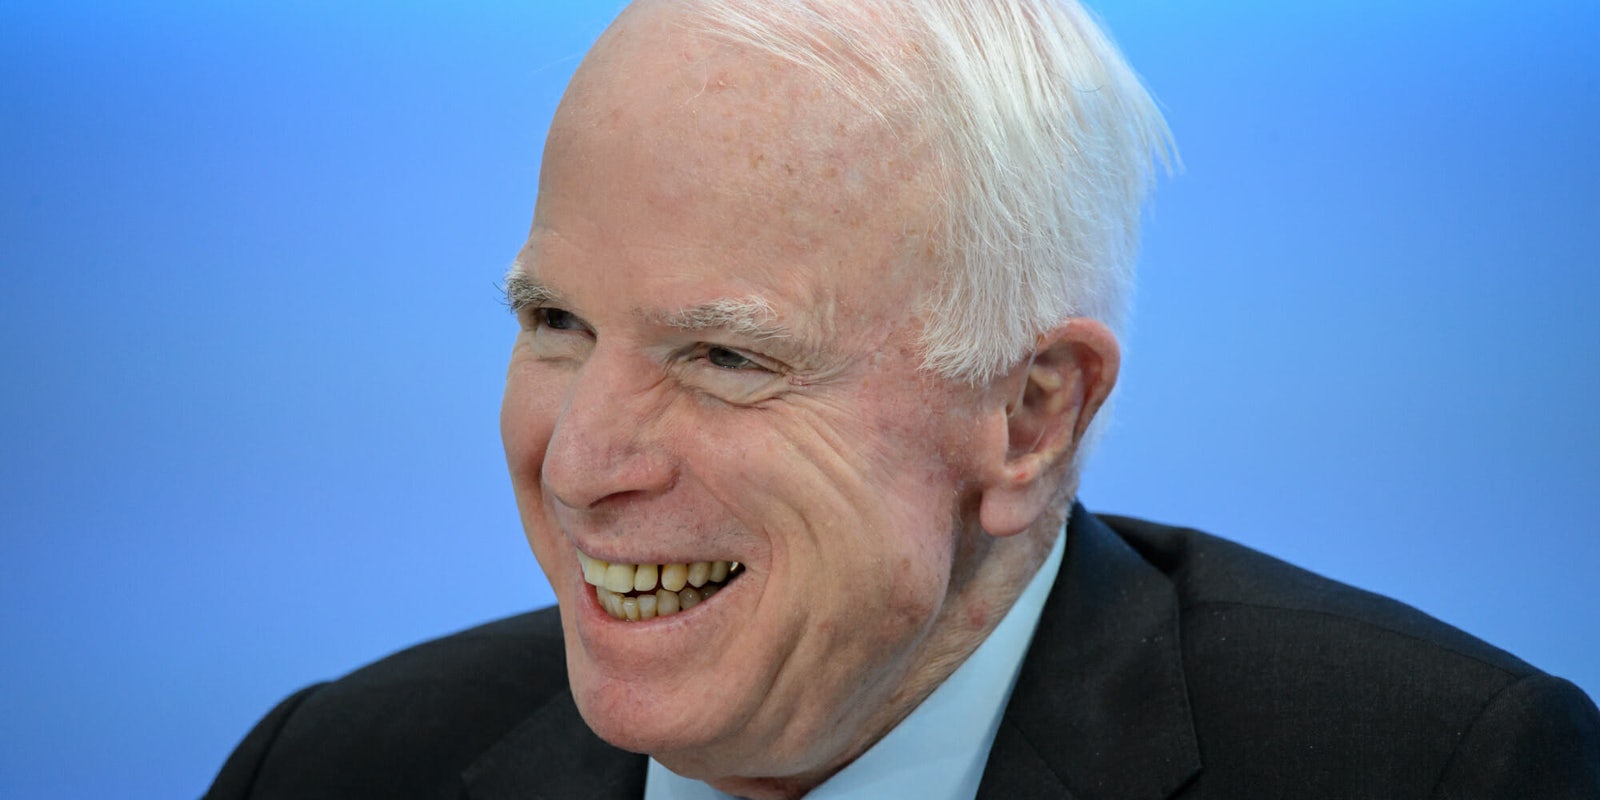 Sen. John McCain Smiling